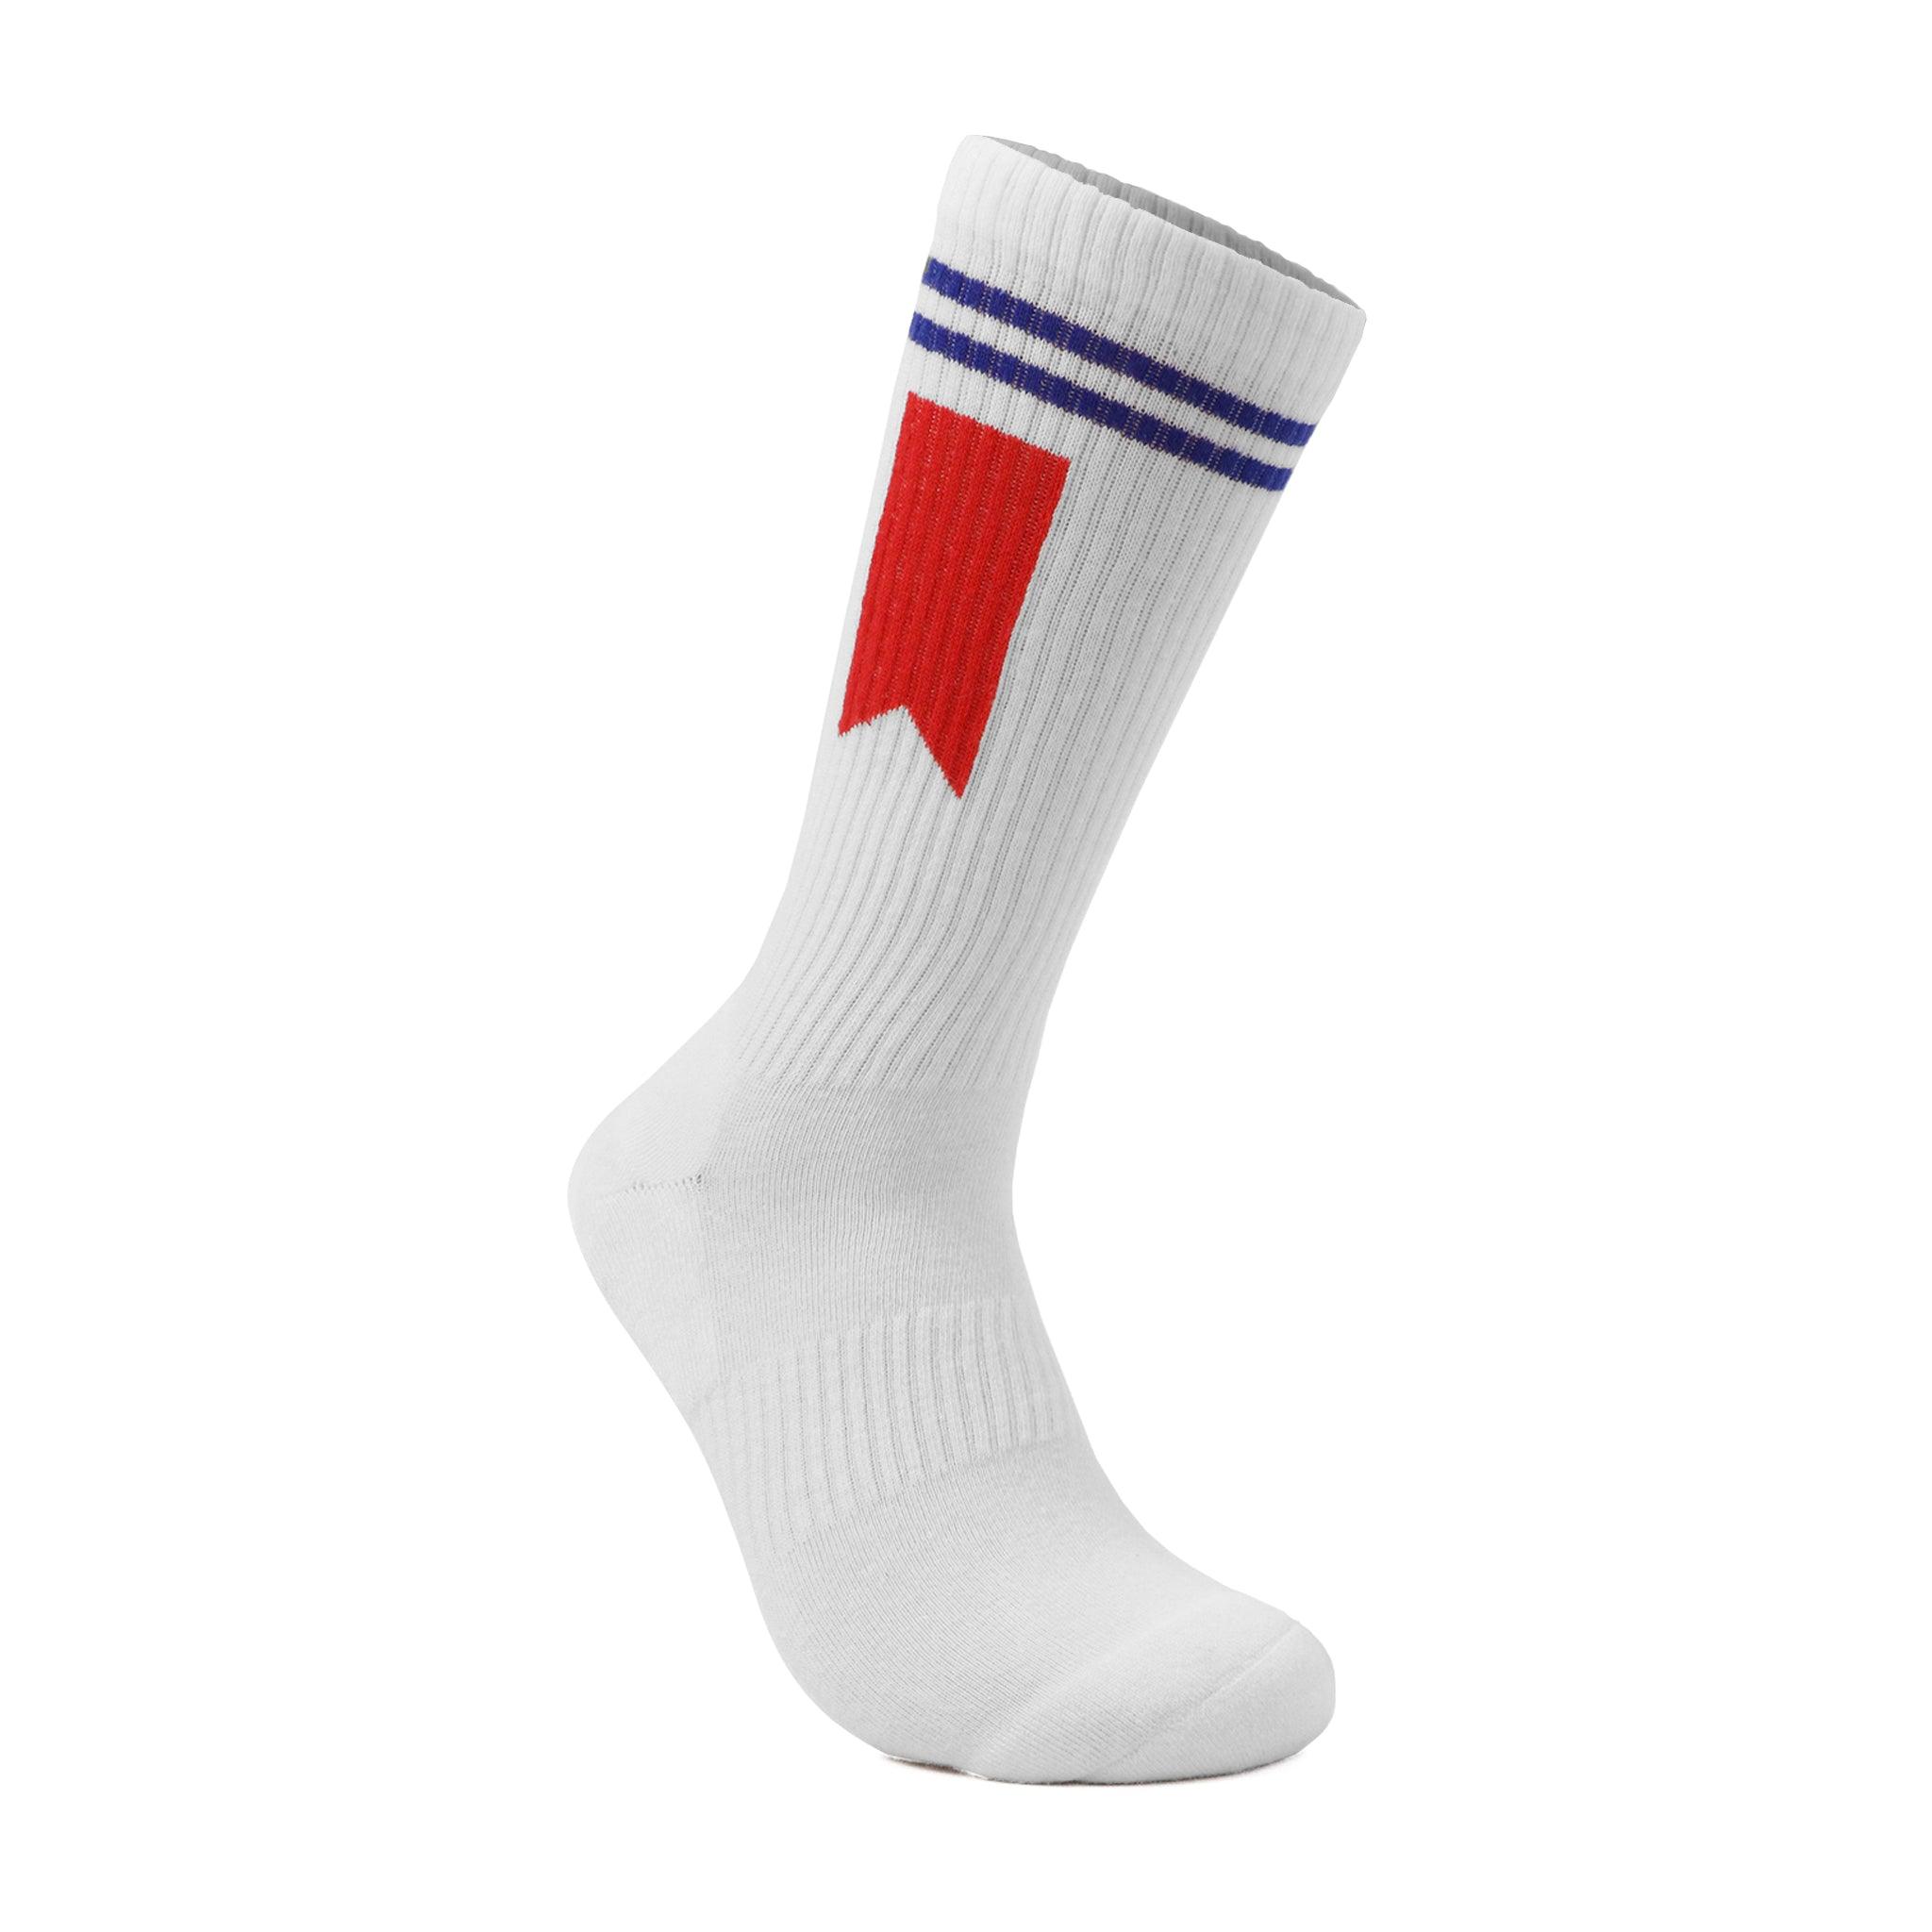 Michelob Ultra Socks